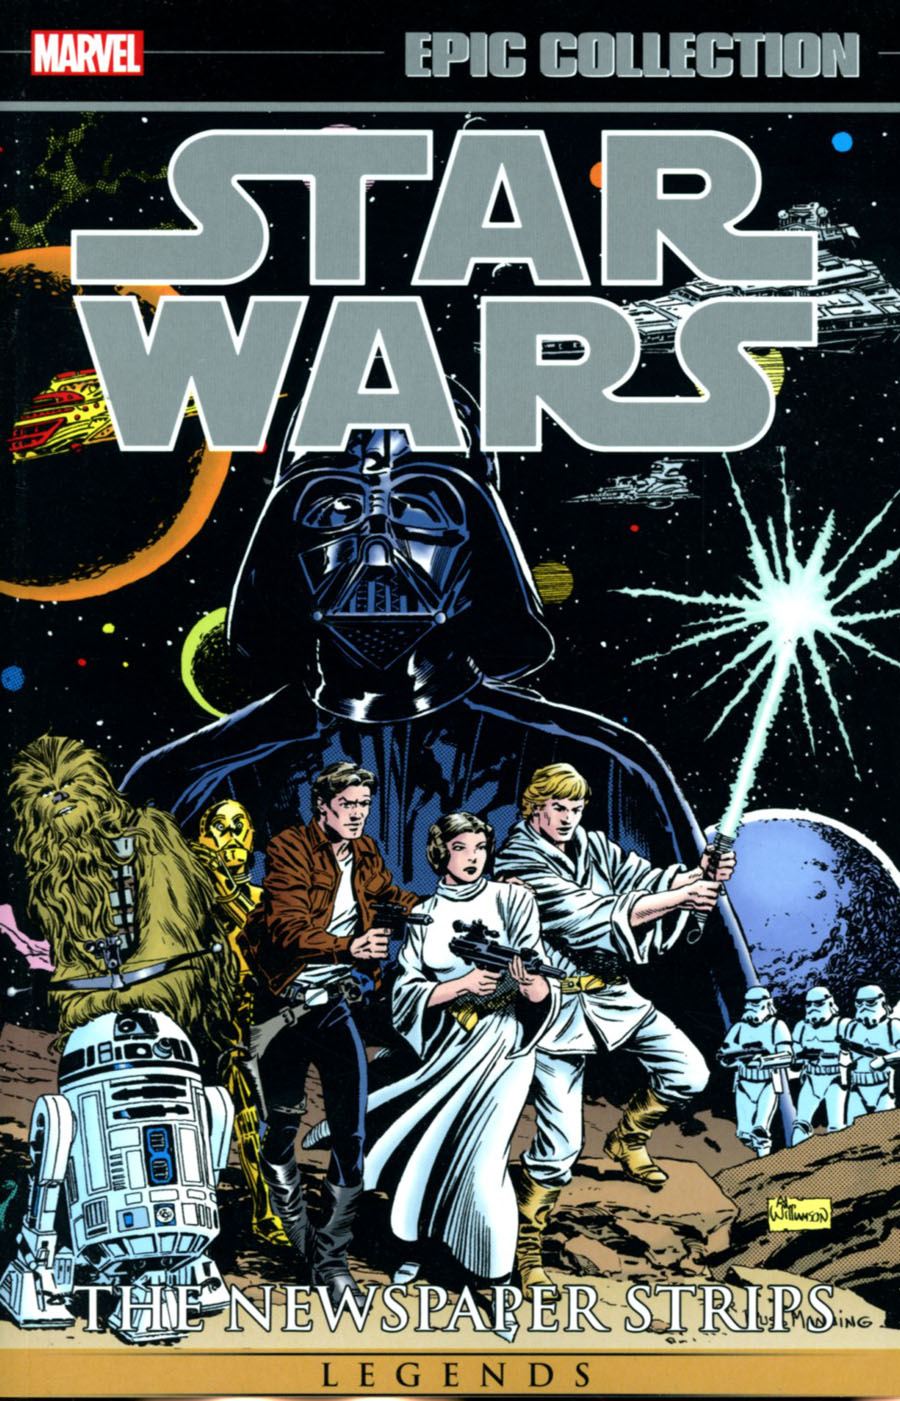 Star Wars Legends Epic Collection Newspaper Strips Vol 1 TP